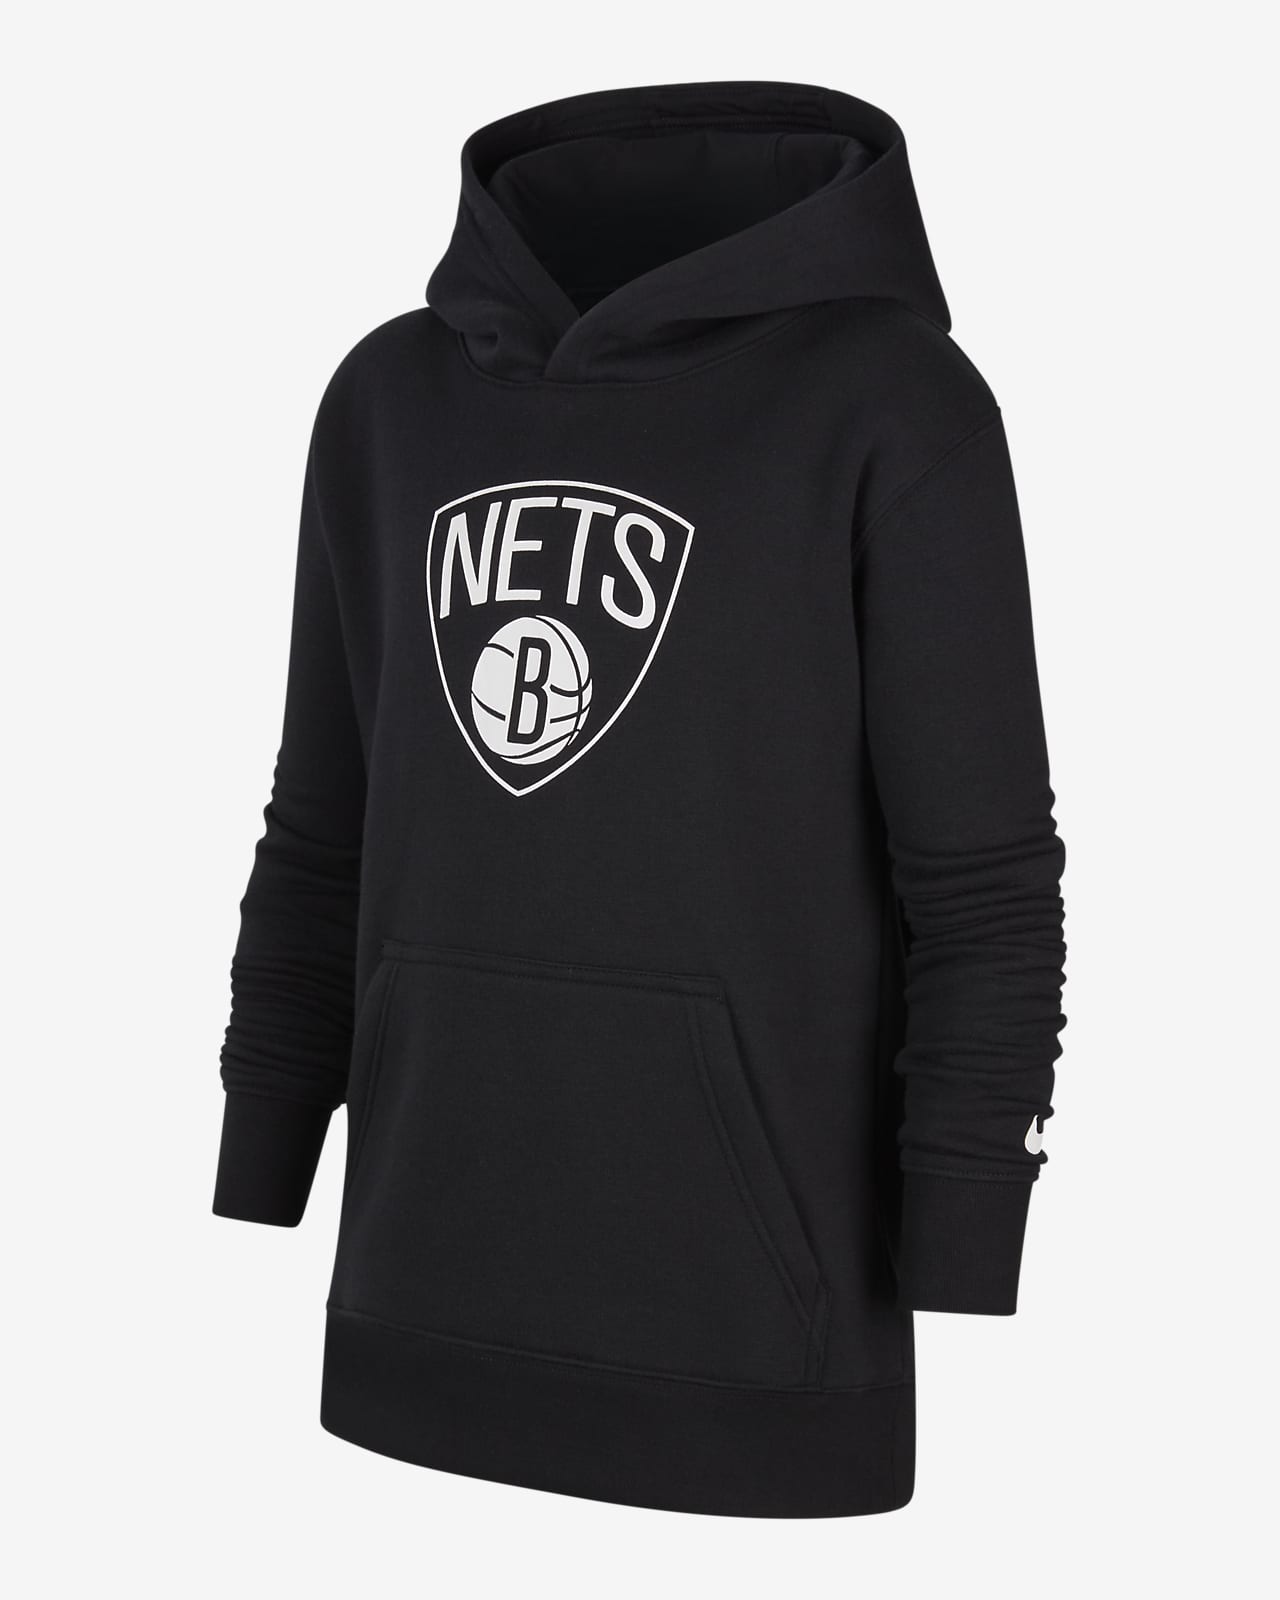 Official Brooklyn Nets Hoodies, Nets Sweatshirts, Pullovers, Nets Hoodie